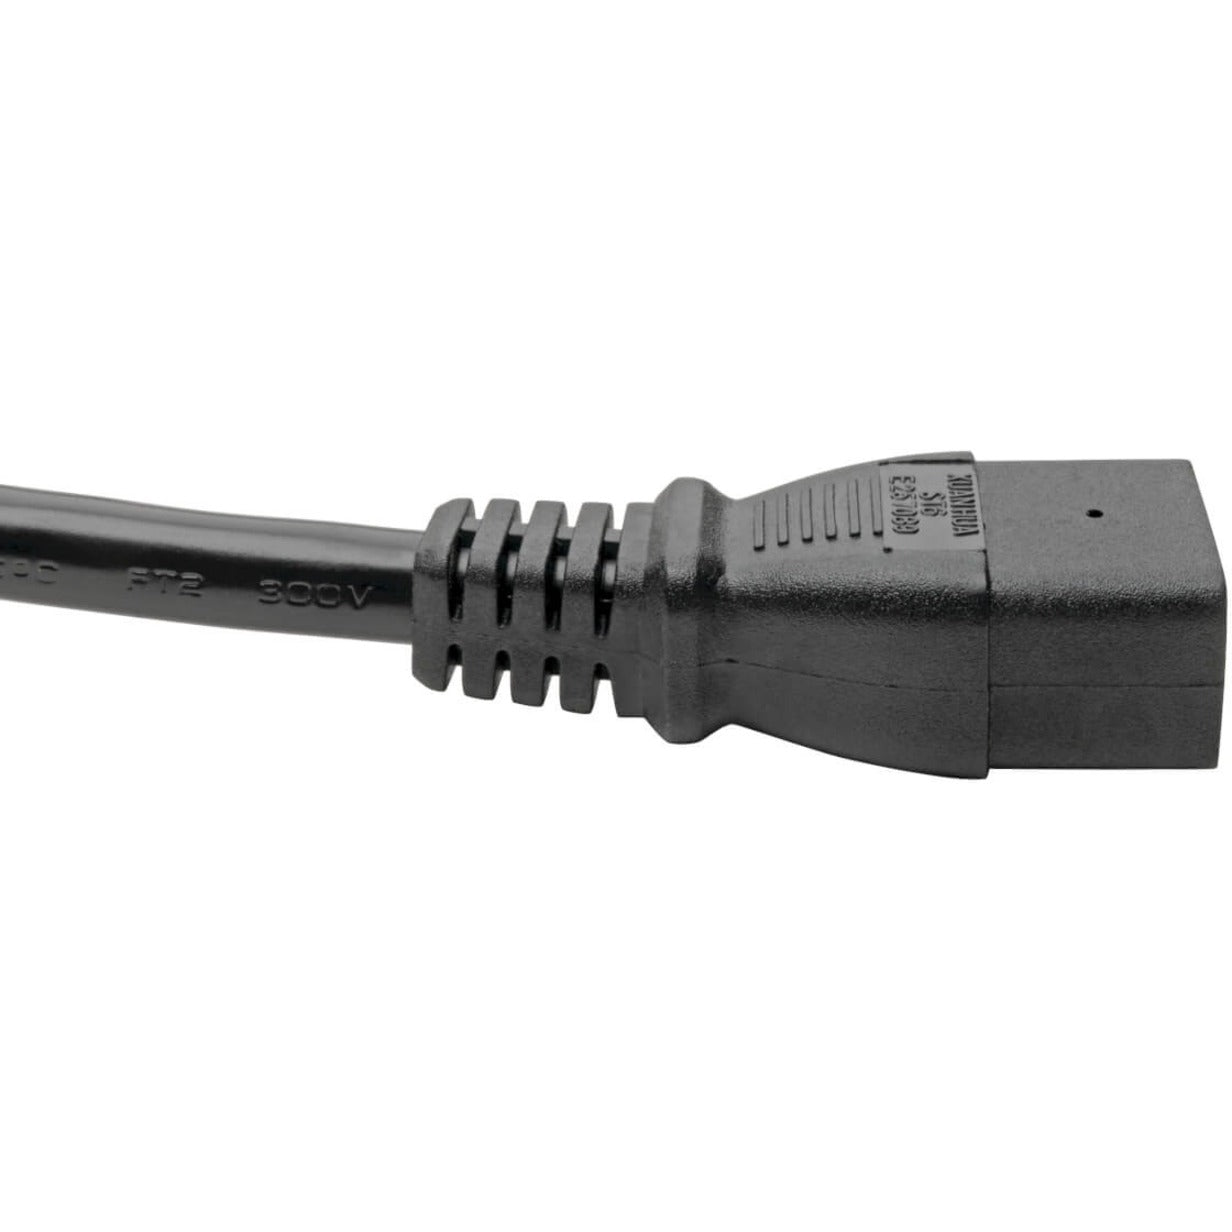 Tripp Lite P040-006 Standard Power Cord, 6 ft, 20A, 250V AC, NEMA L6-20P to IEC 60320 C19, Black